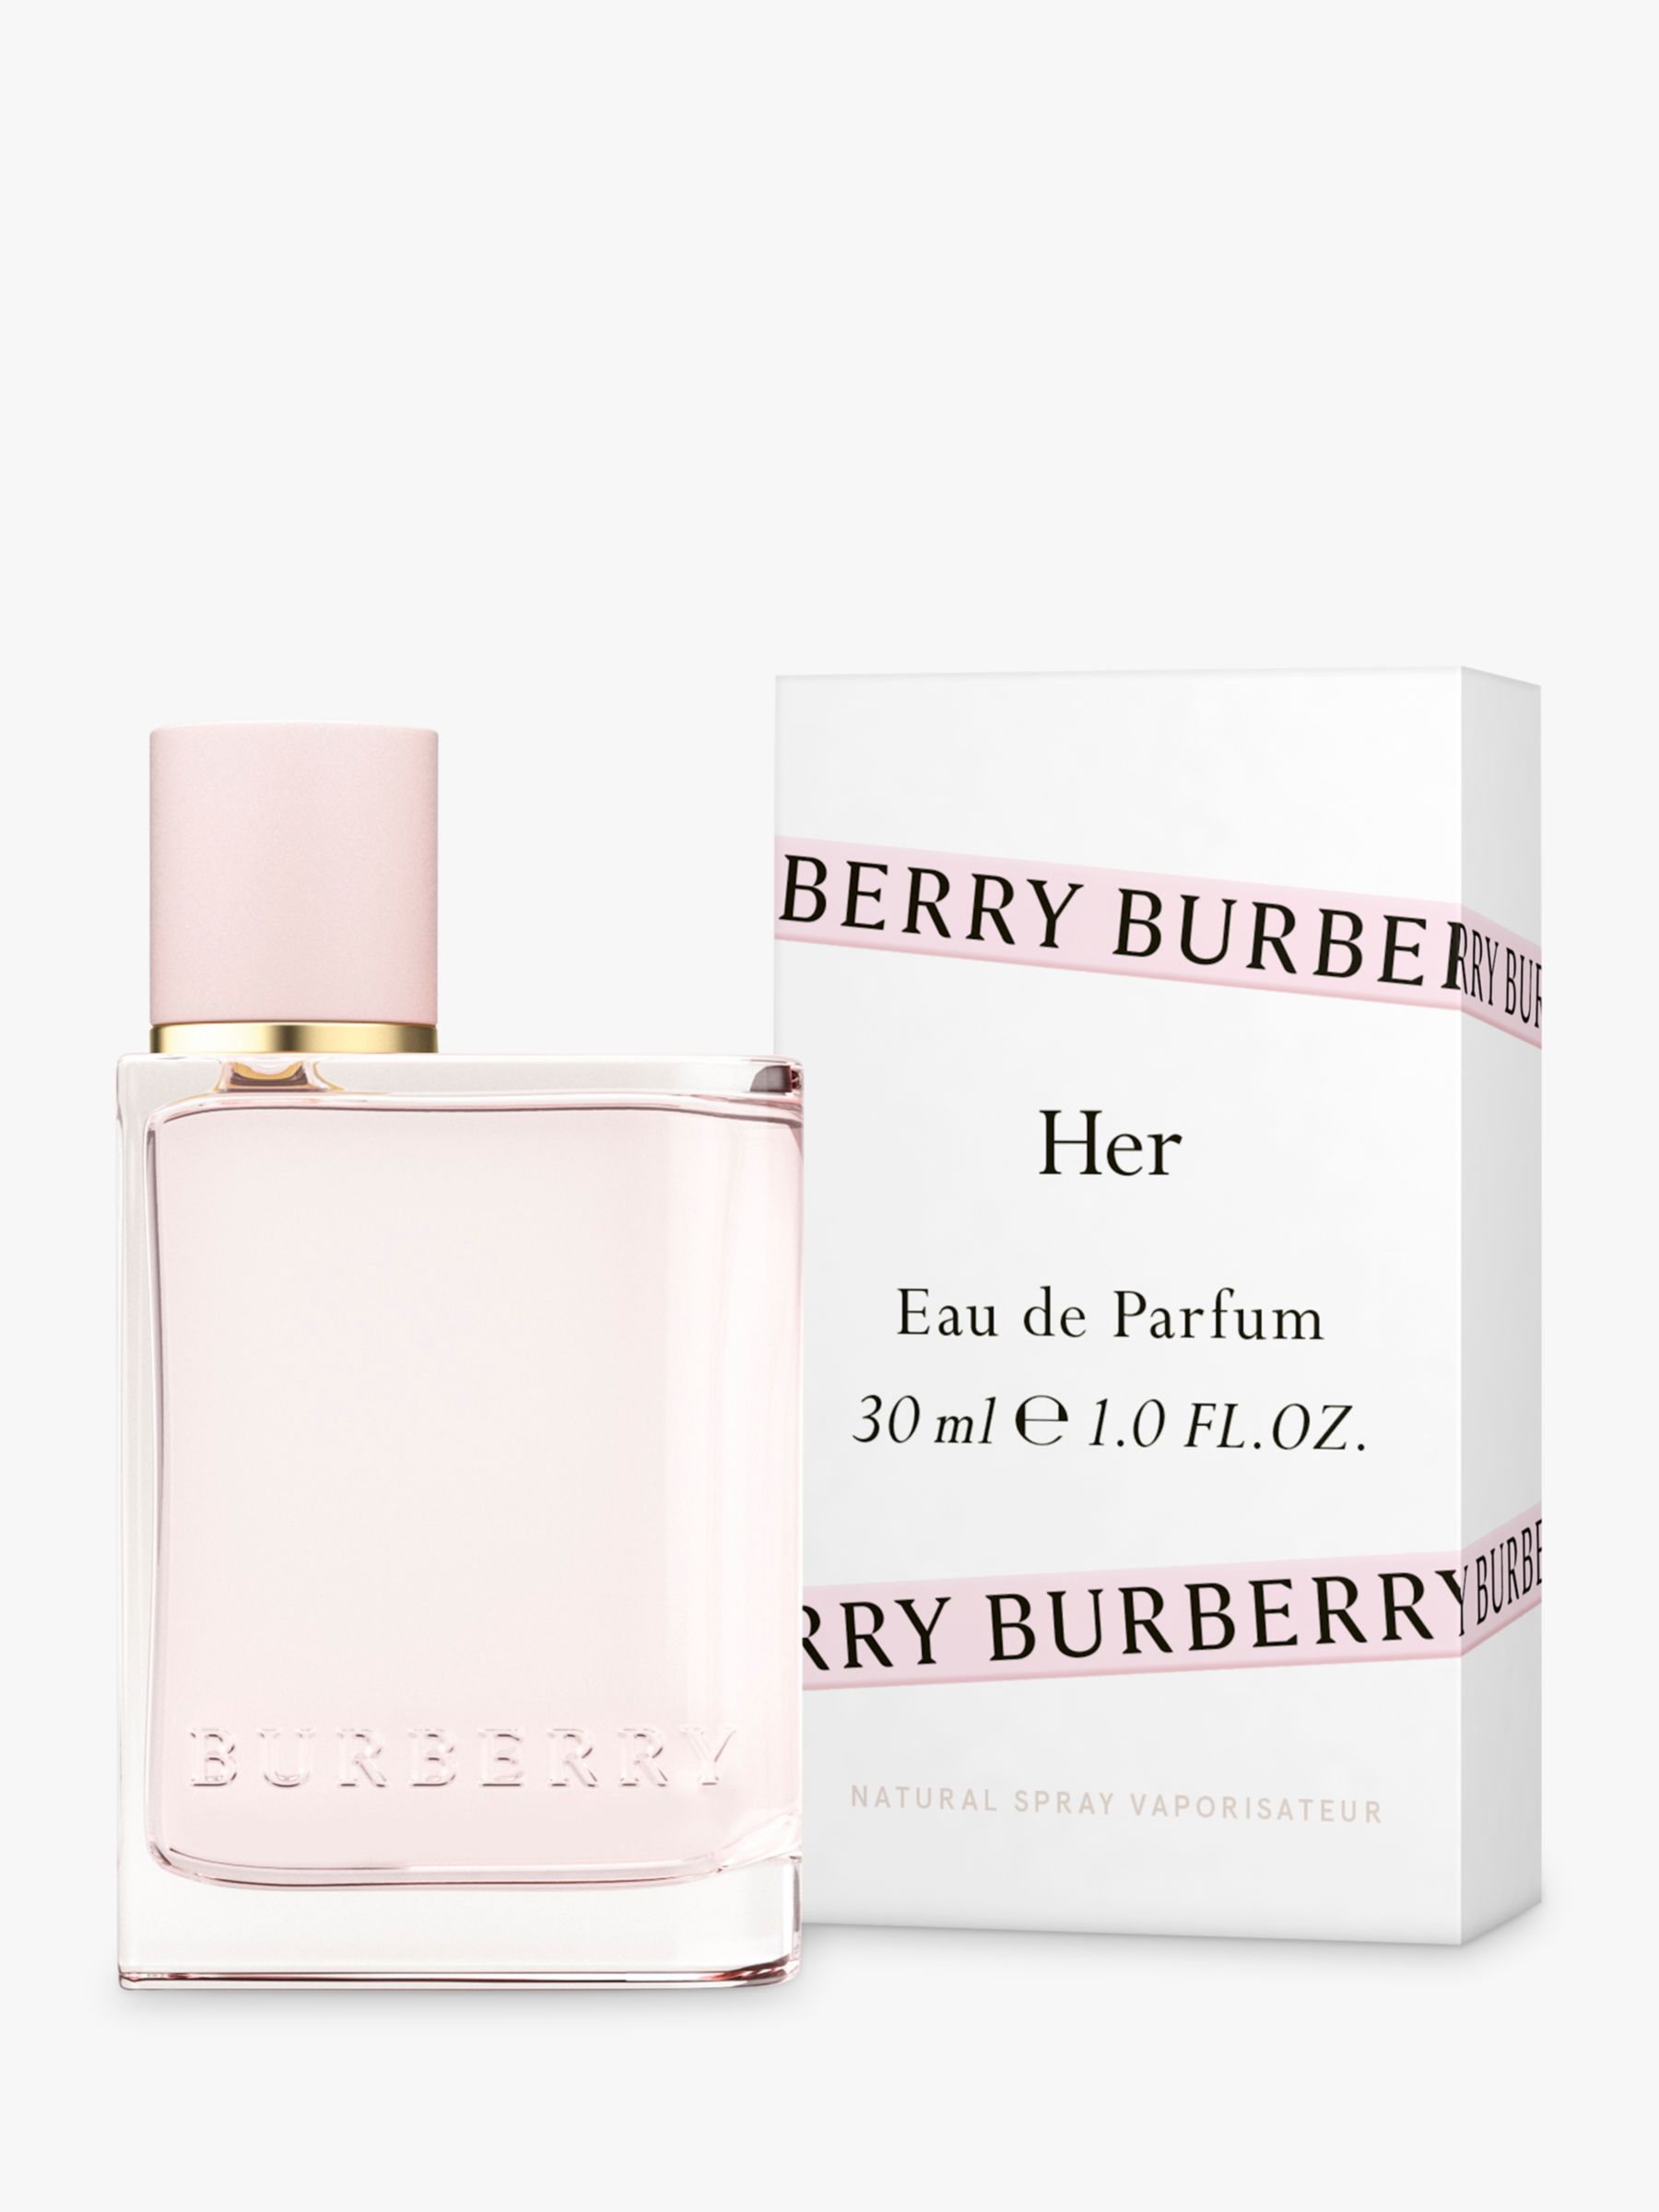 Burberry Her Eau de Parfum at John 